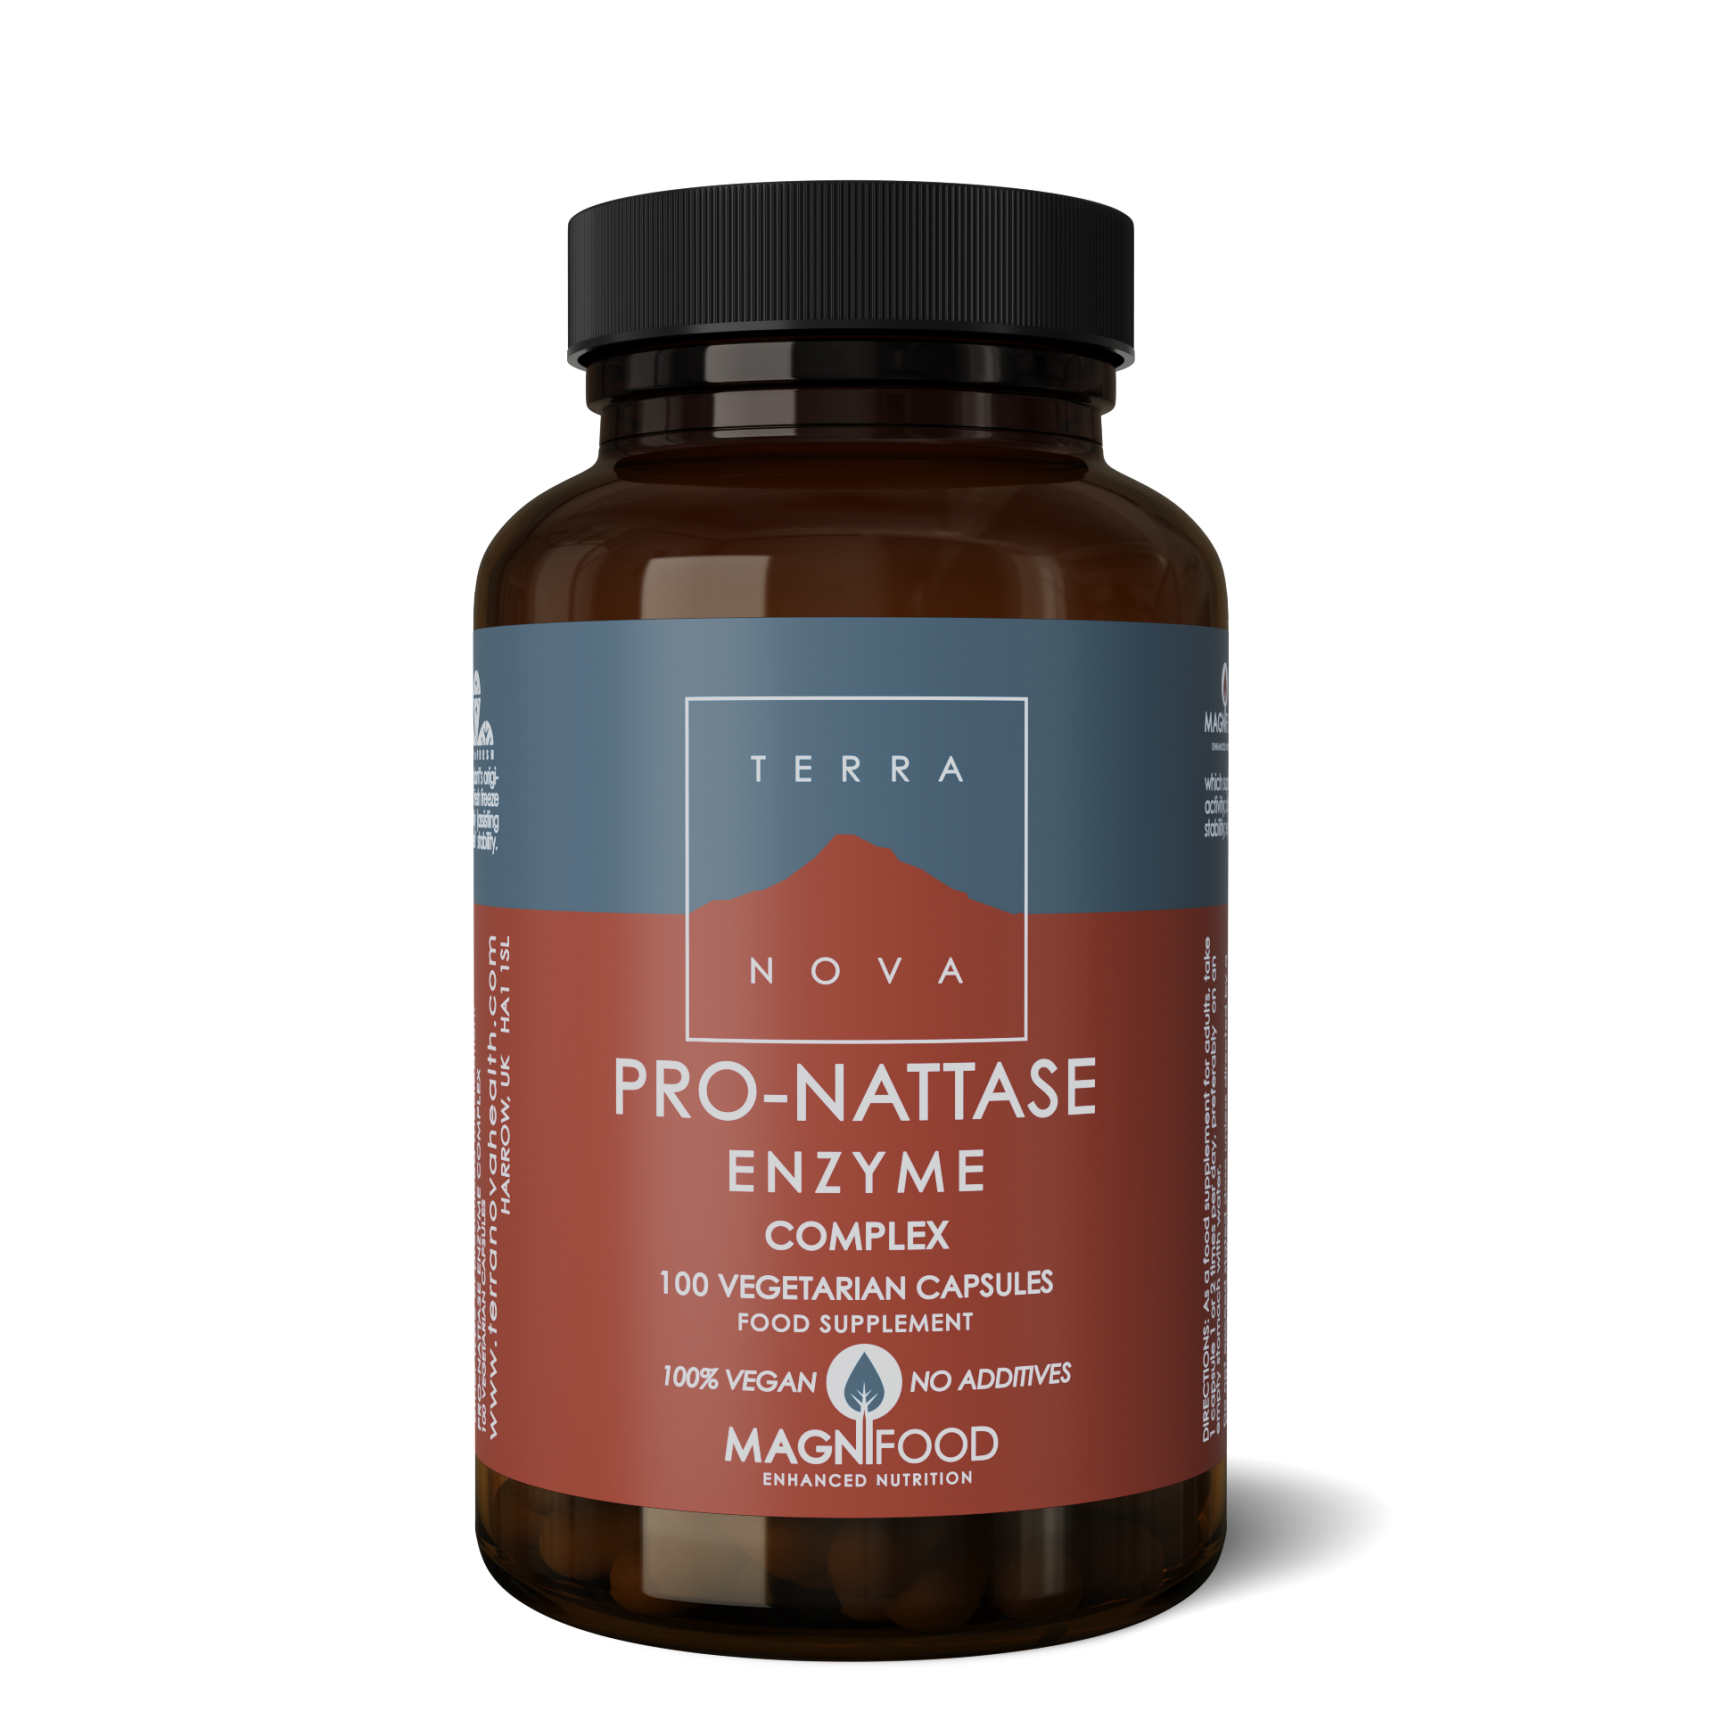 Pro-Nattase Enzyme Complex 100's